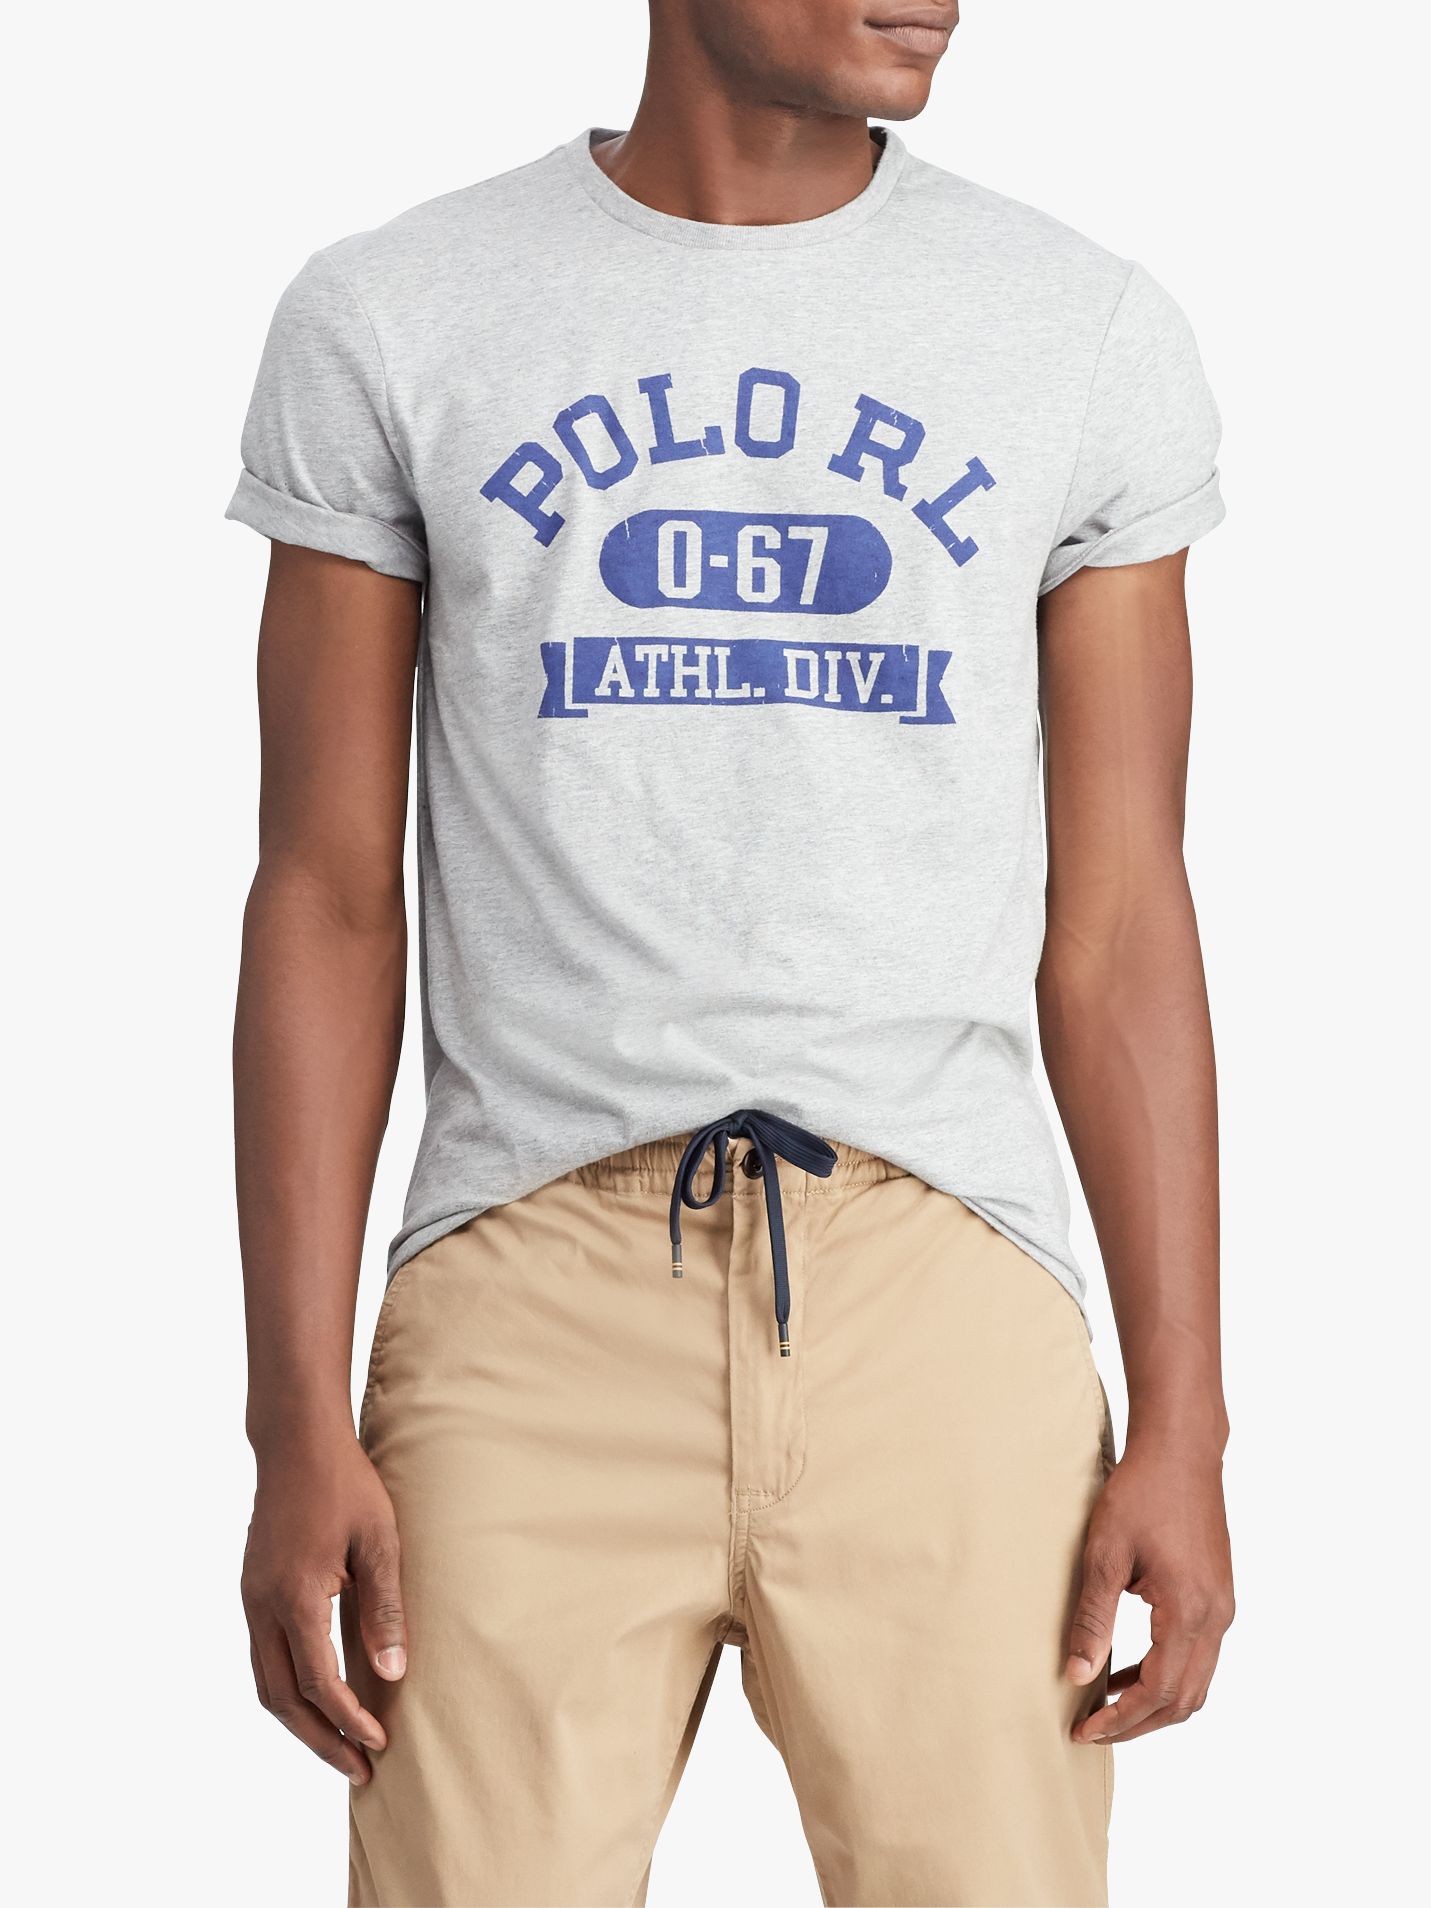 Polo Ralph Lauren Short Sleeve Graphic T-Shirt, Andover Heather